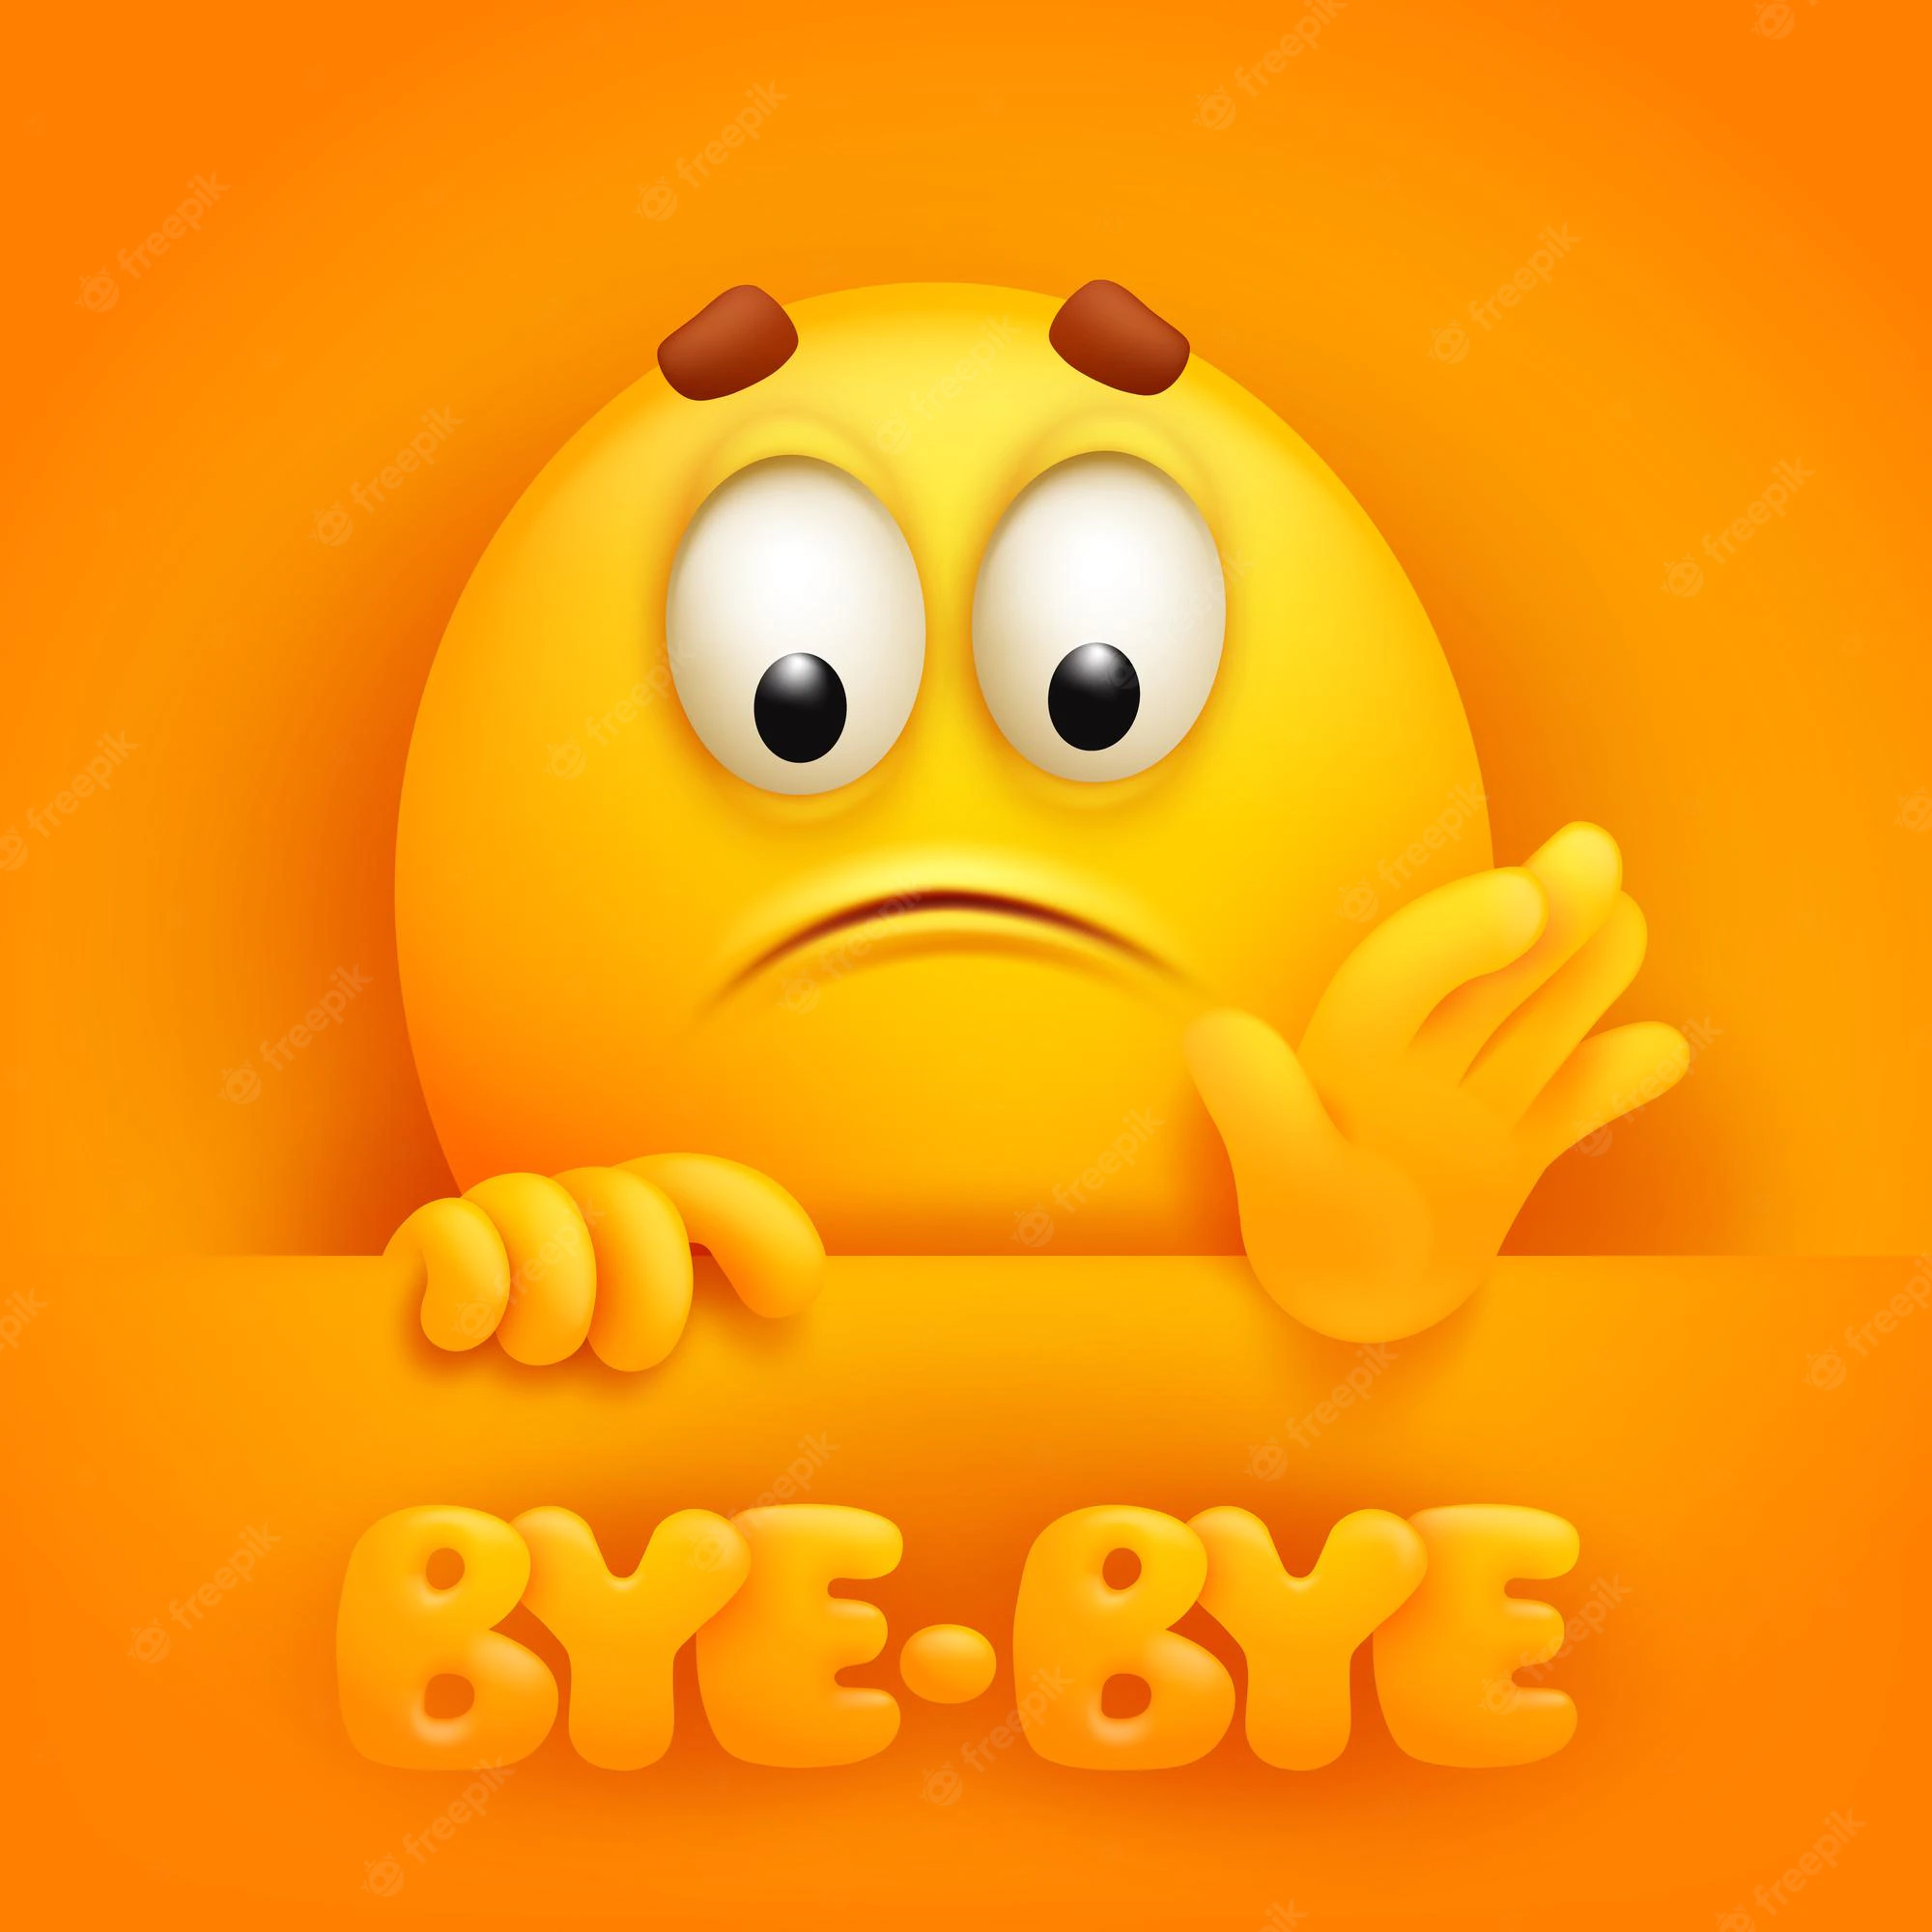 bye bye cute emoji cartoon character yellow backround 106878 540